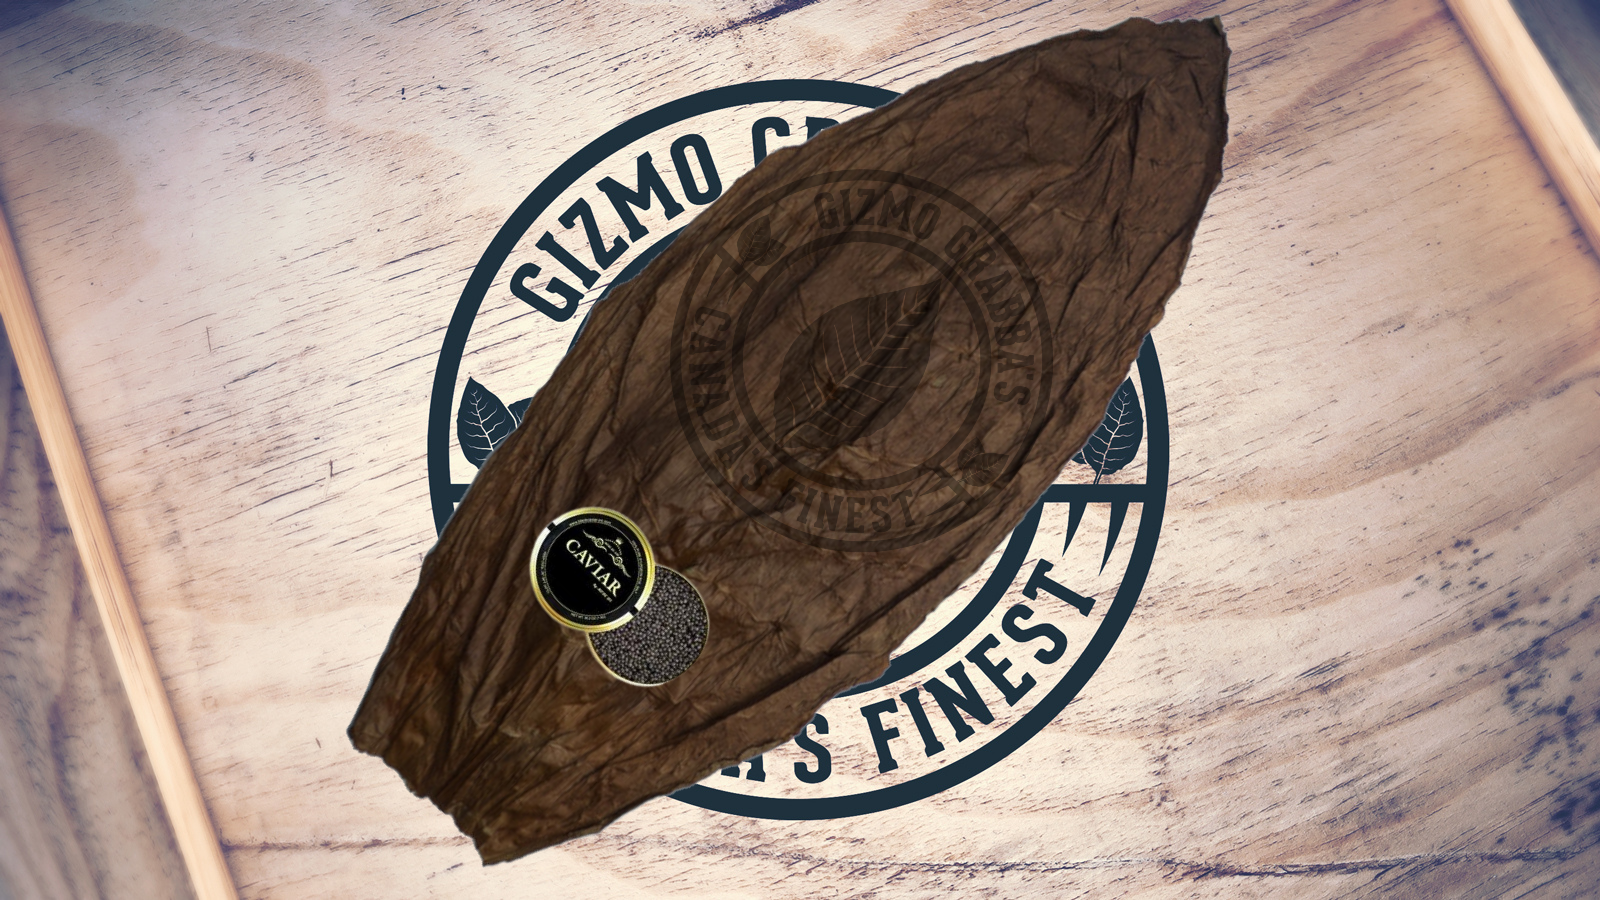 Black Caviar Grabba Leaf: Top-Rated Organic Wrap for Supreme Smoking  Experience – Gizmo Grabbas